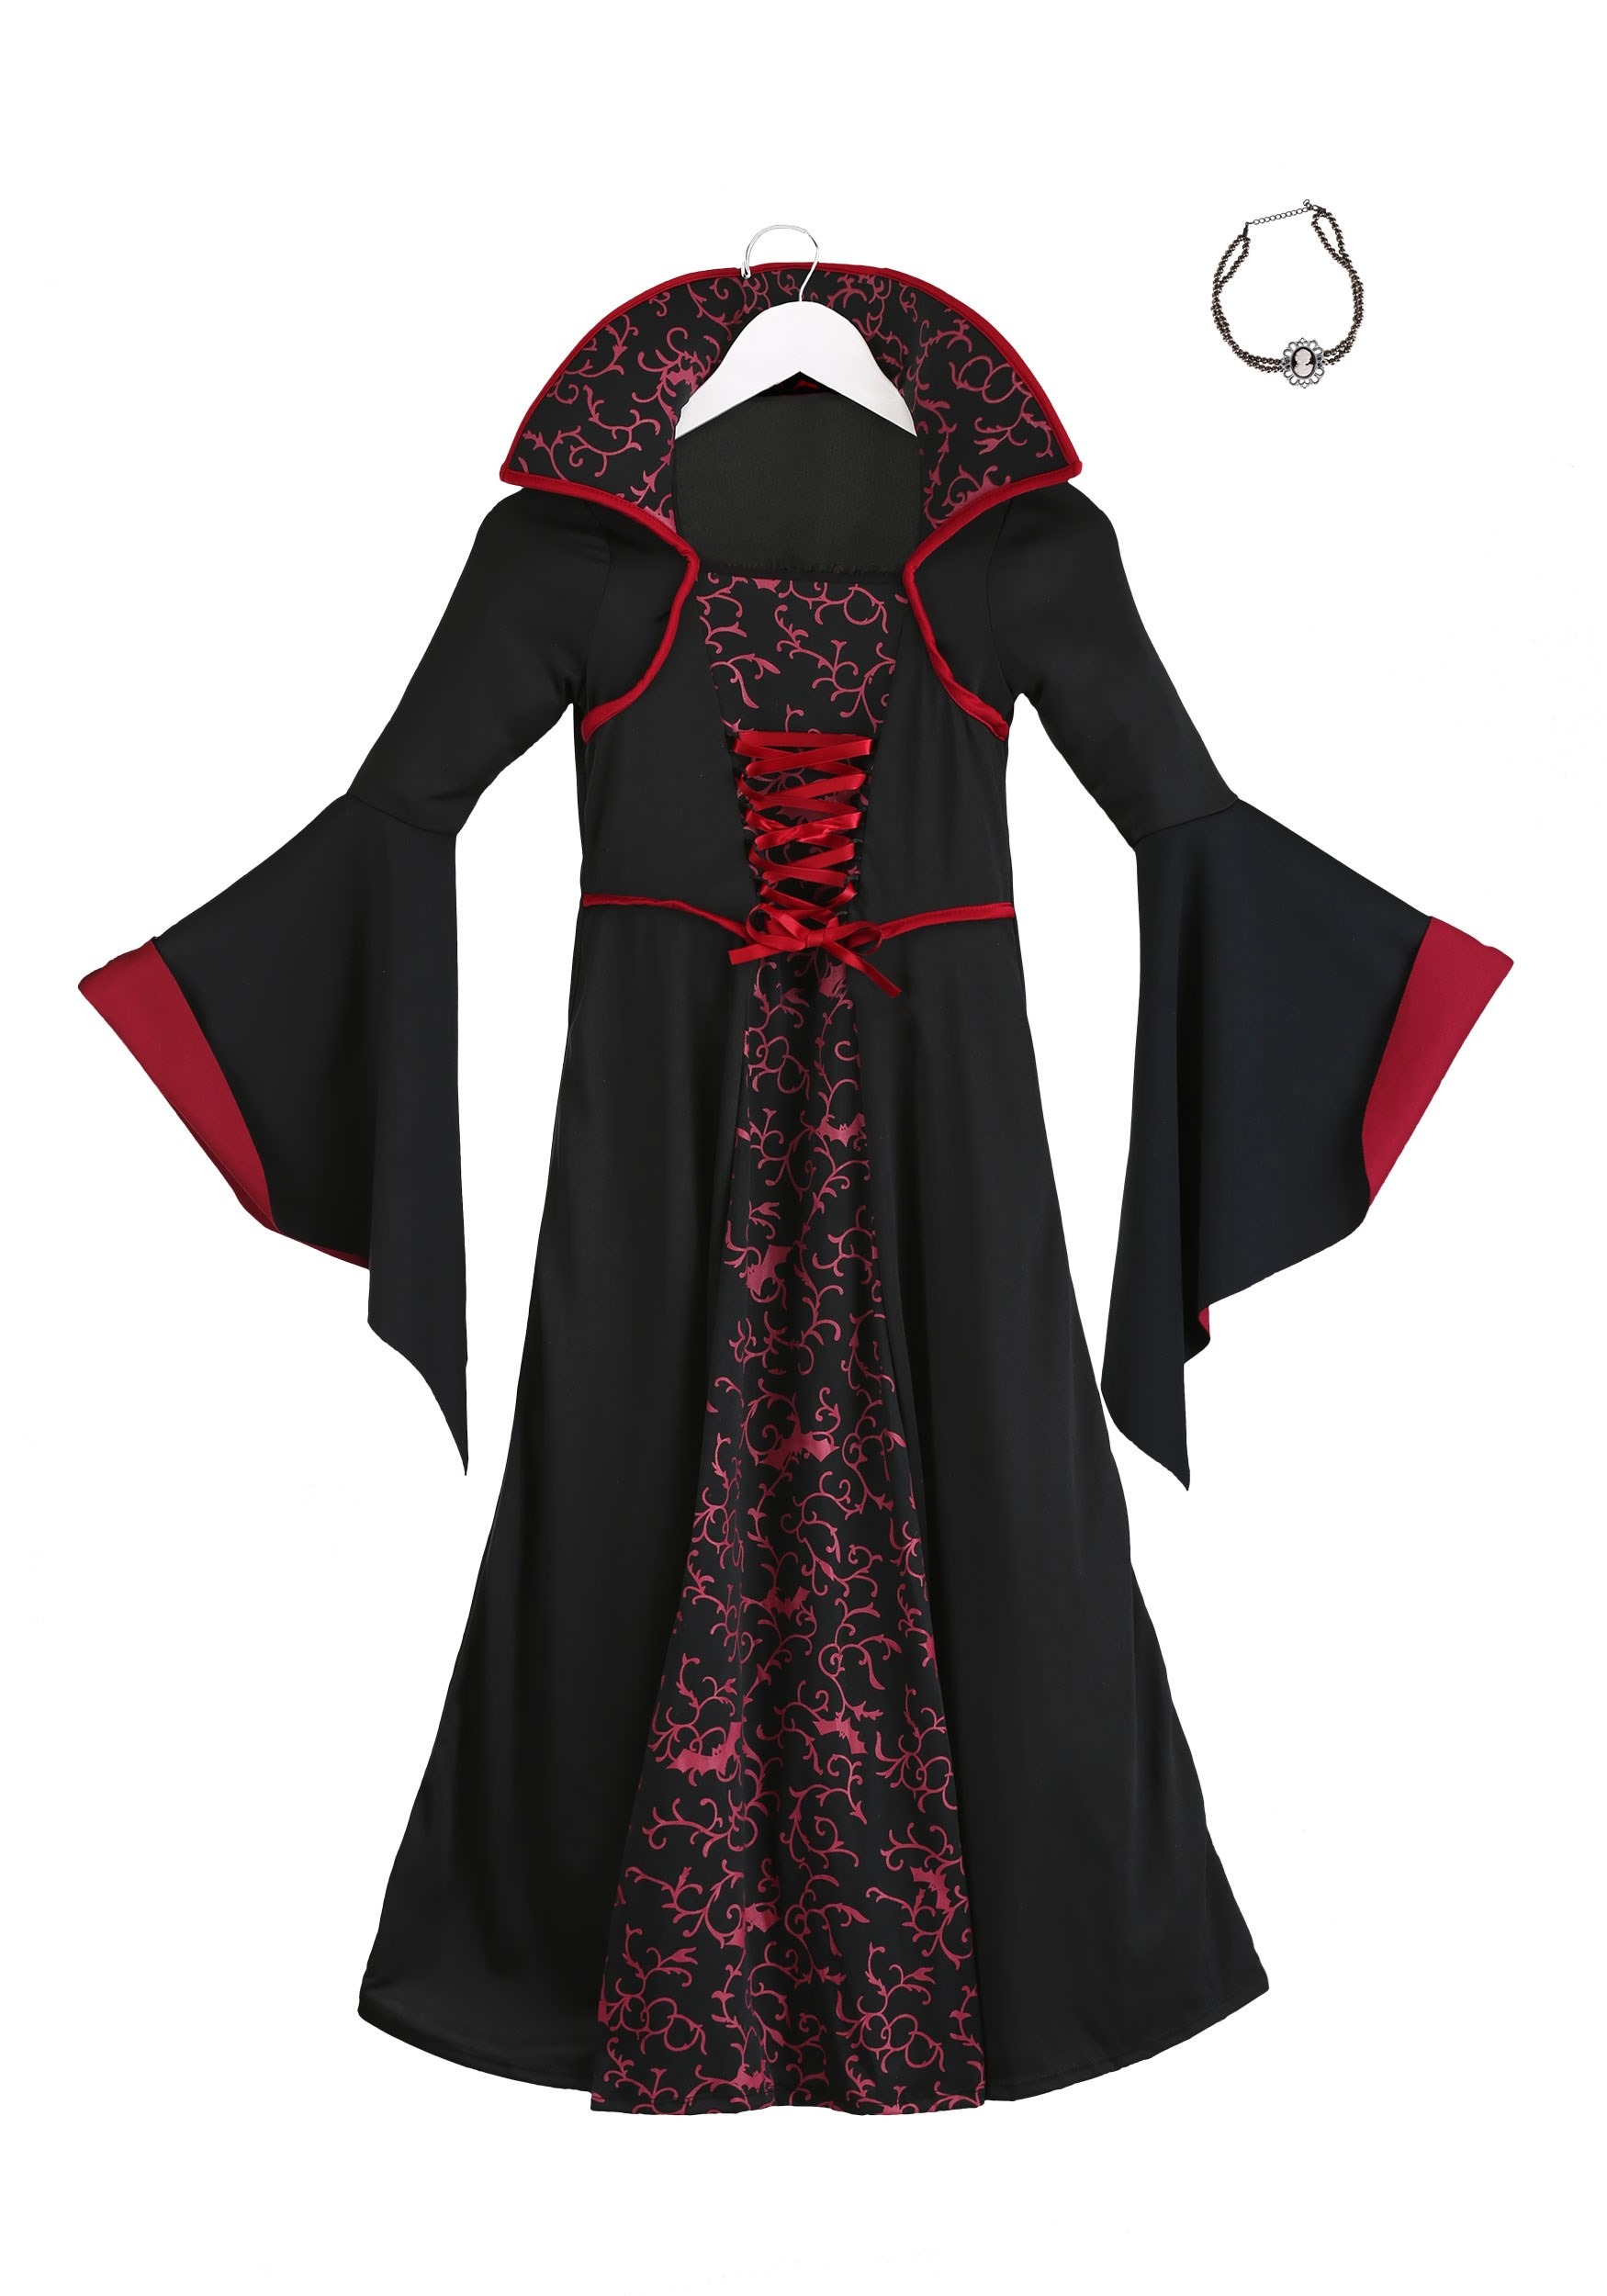 Girls Halloween Vampire Queen Fancy Dress Costume Vampiress Outfit Age 8-10yrs 